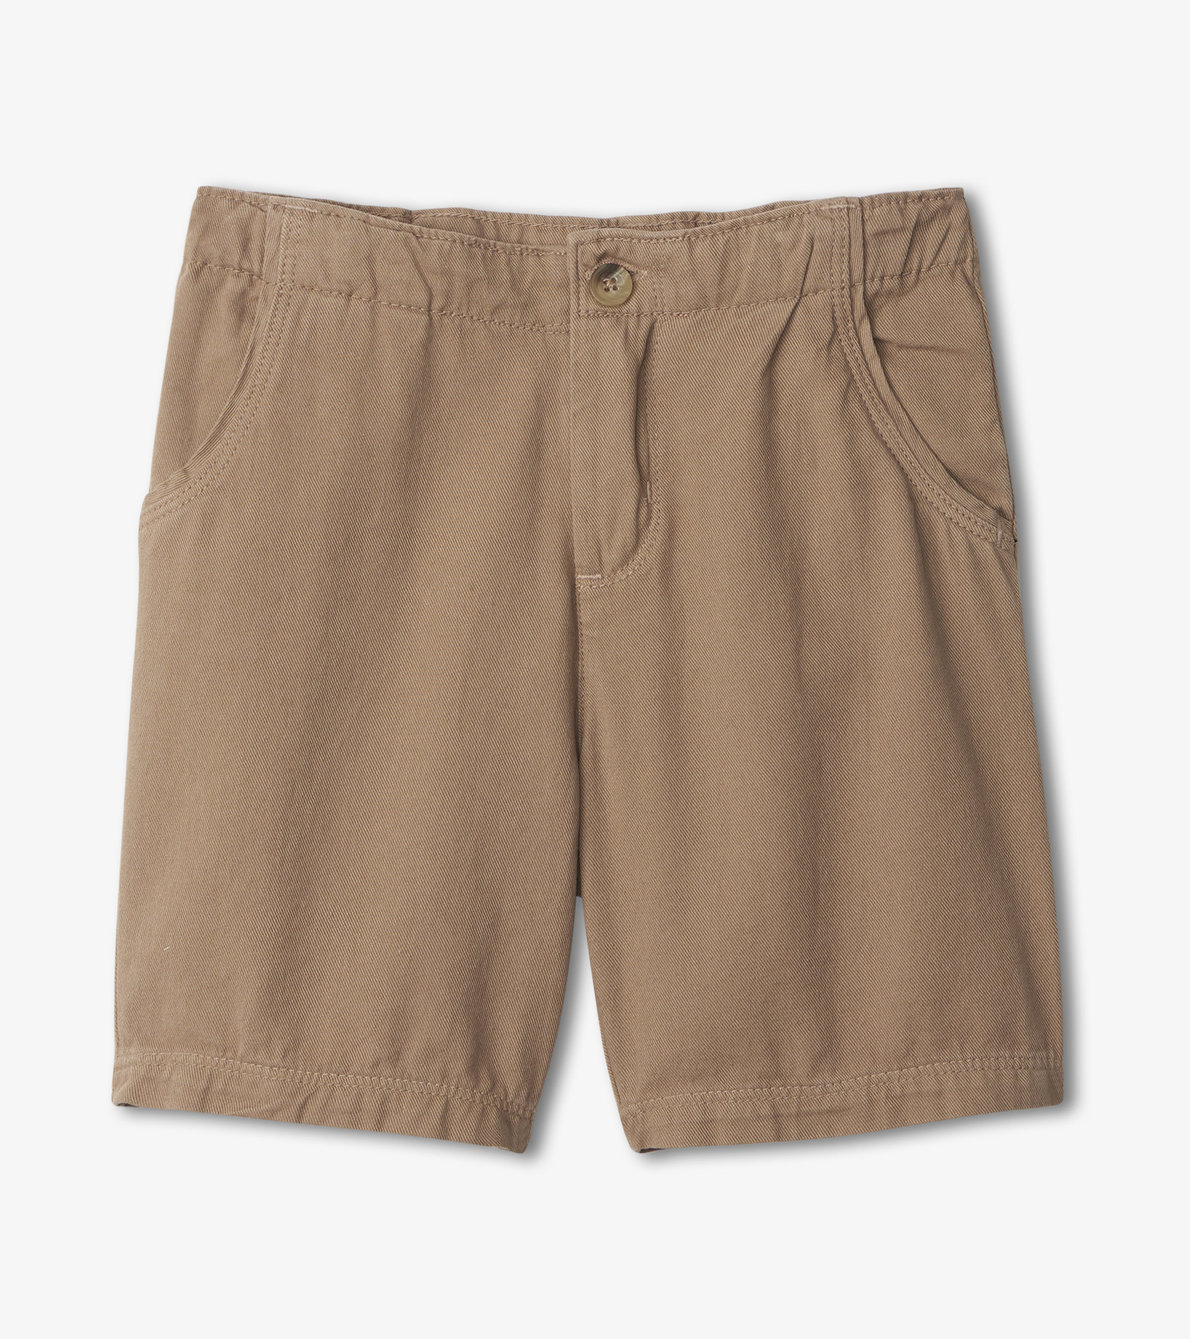 View larger image of Boys Khaki Twill Shorts